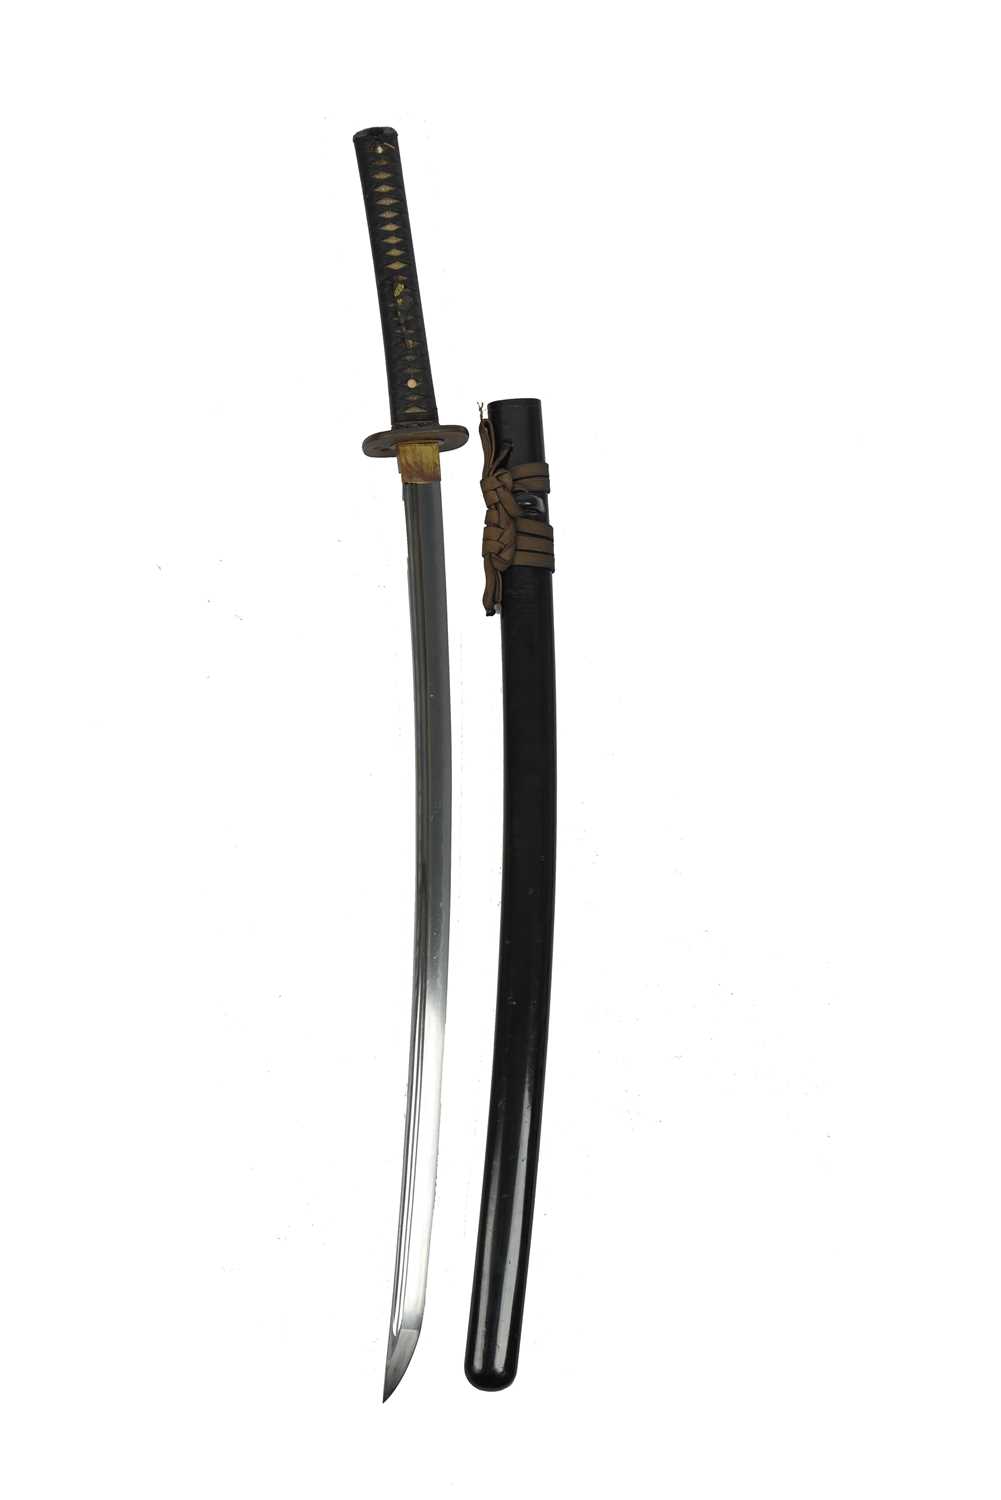 A Japanese sword (katana), blade 28 in., hon-zukiri, hamon based on suguha, signed (Omi no kami - Image 2 of 3